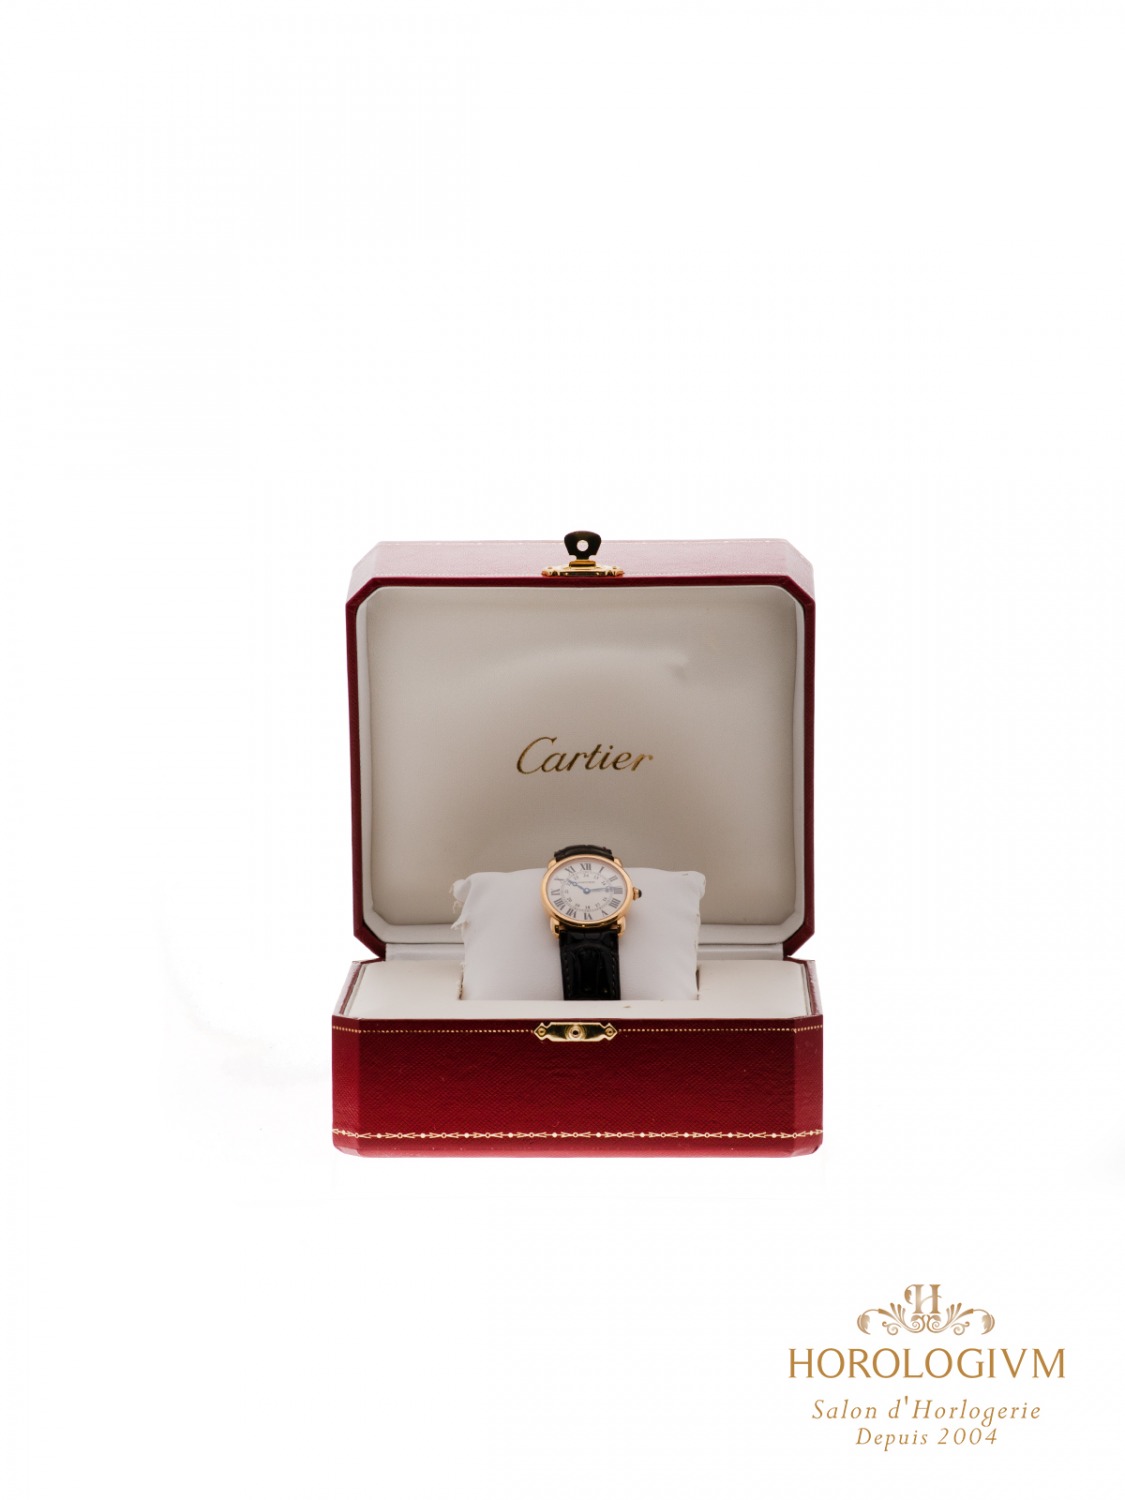 Cartier Ronde Louis Cartier 29MM Ref. W6800151 watch, rose gold